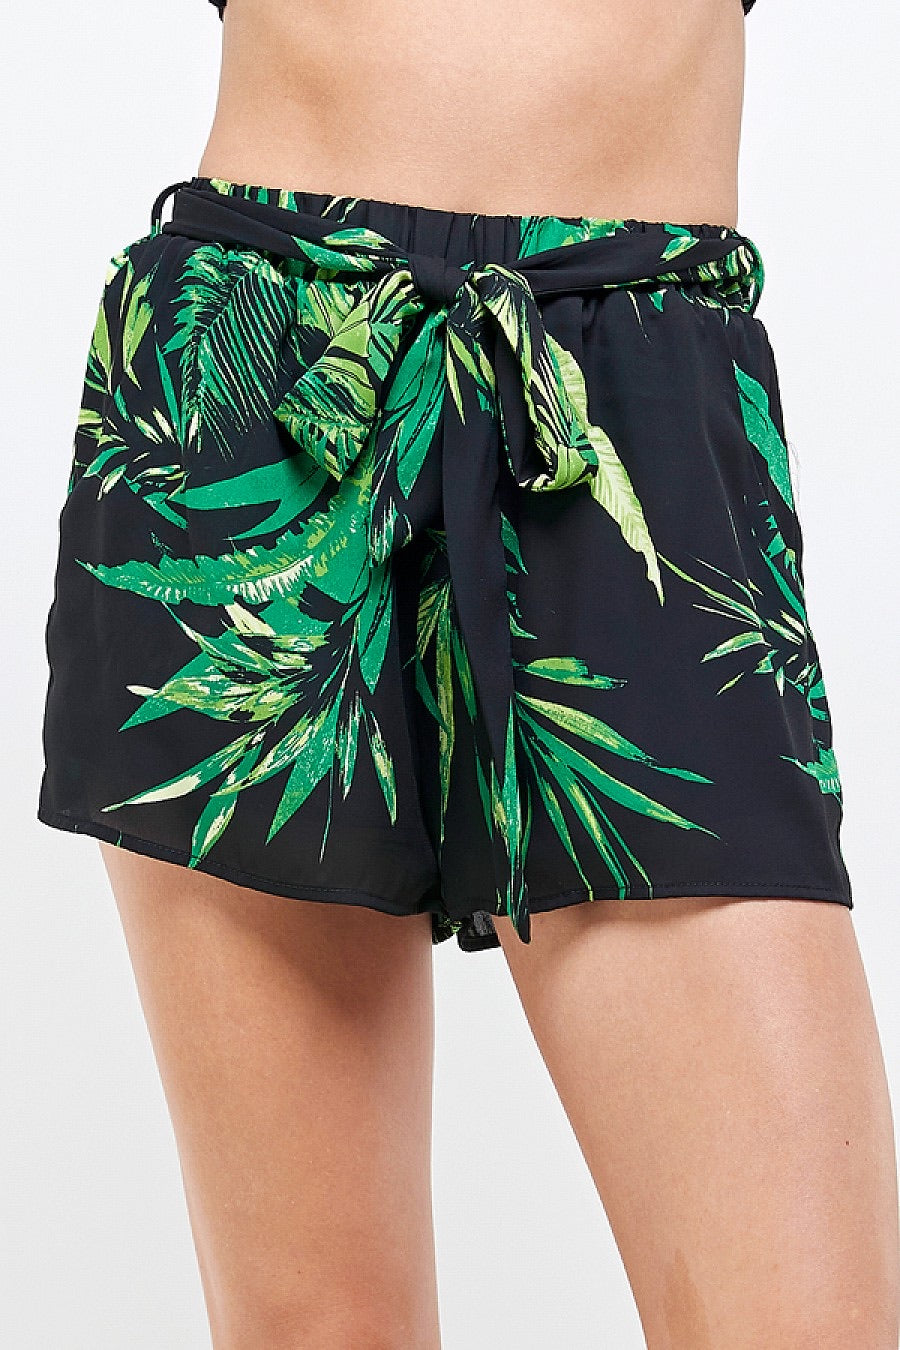 Tropical Destination Printed Shorts - MAVEN